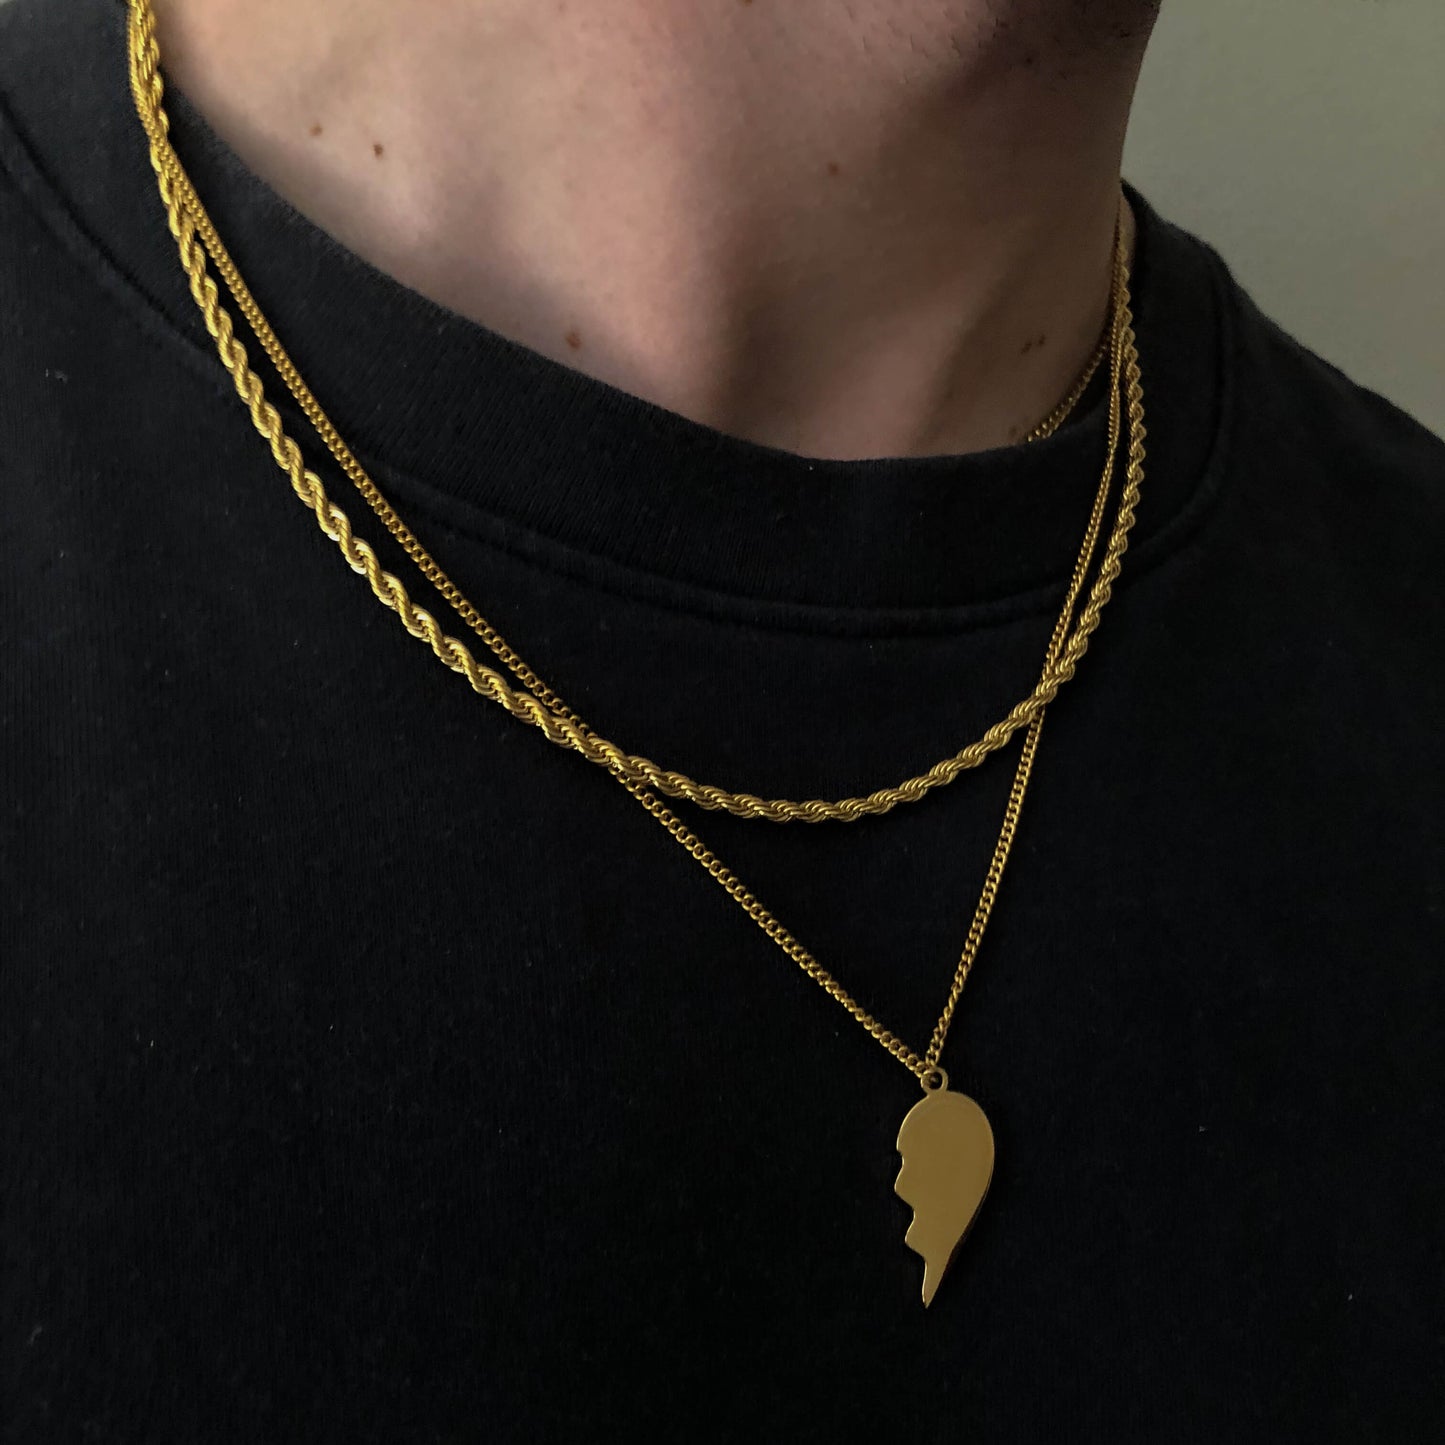 18K gold plated stainless steel snake necklace for men. Joyas para hombre, colgante dorado de serpiente para hombre.